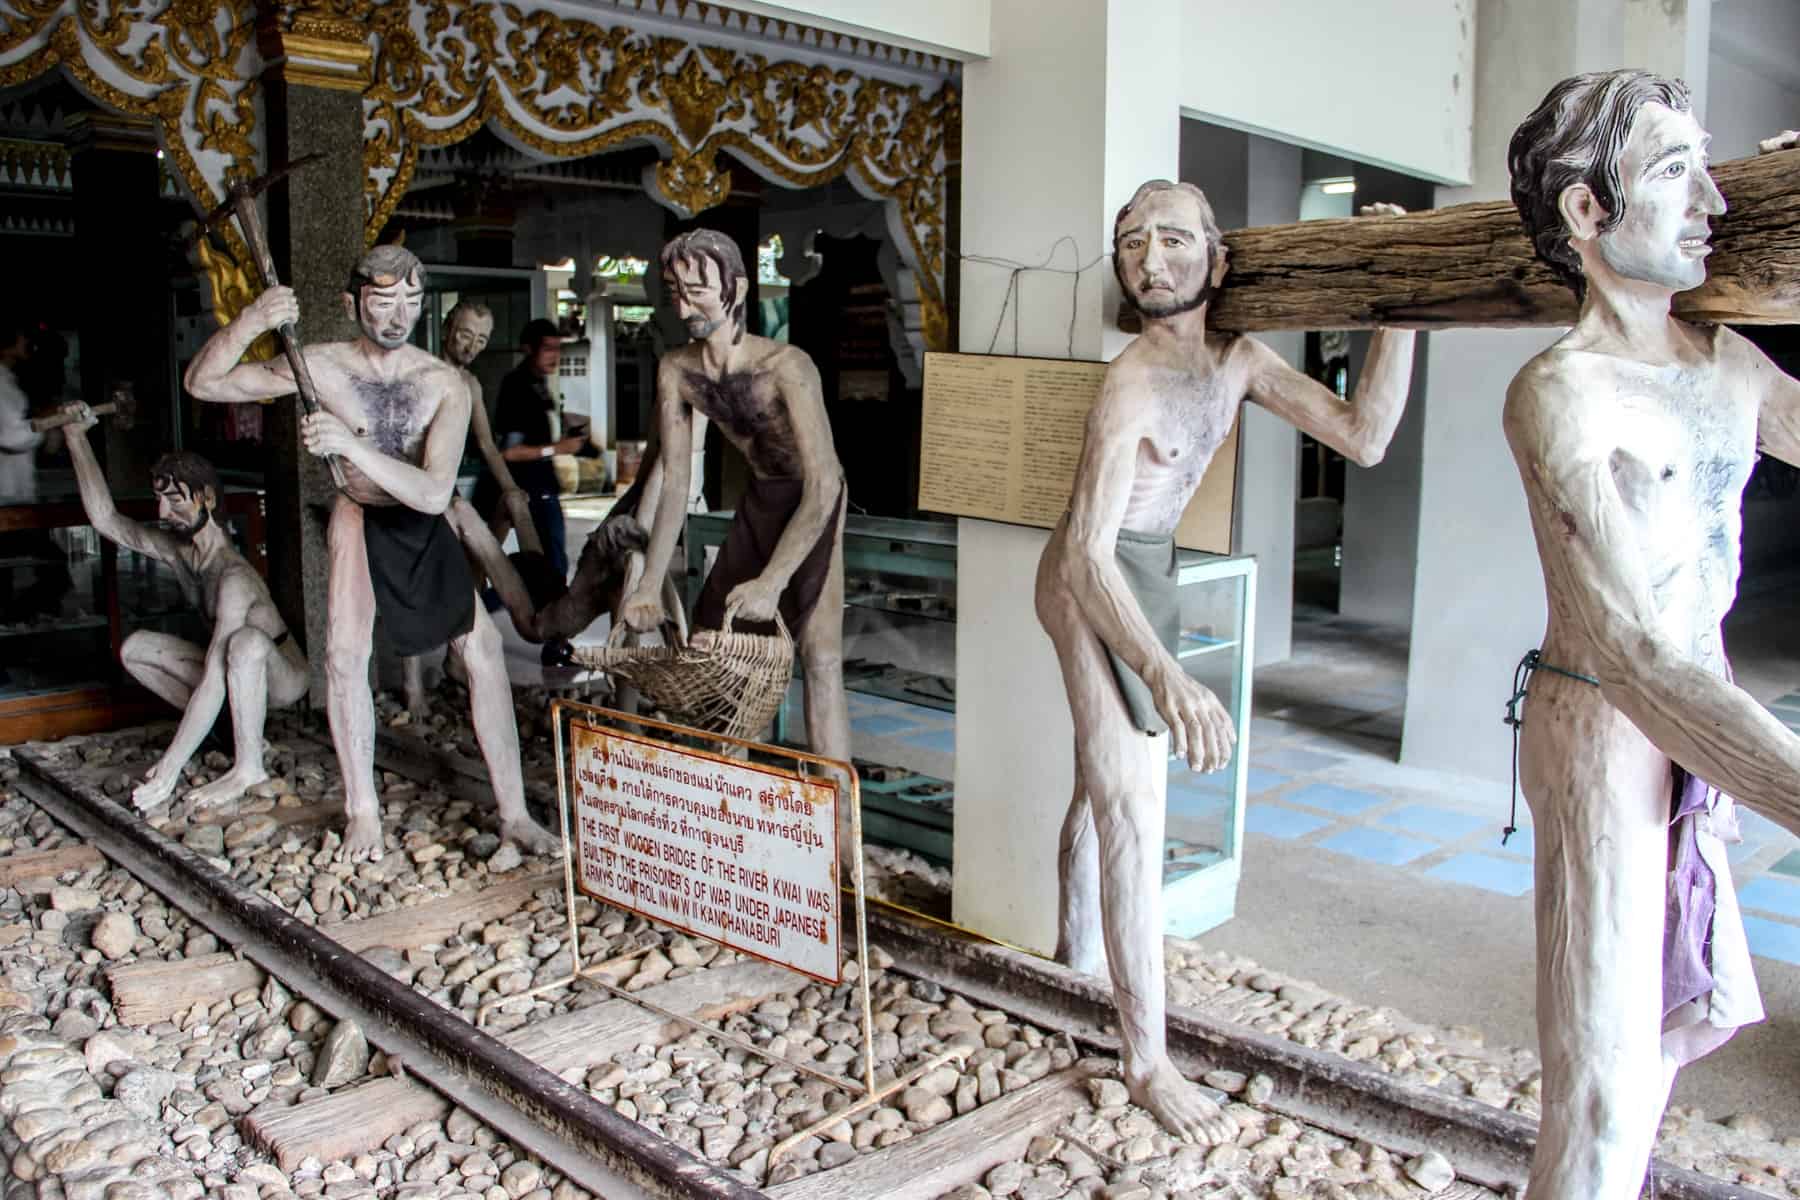 Museum exhibit showing the Prisoners of War constructing the Thai-Burma Death Railway